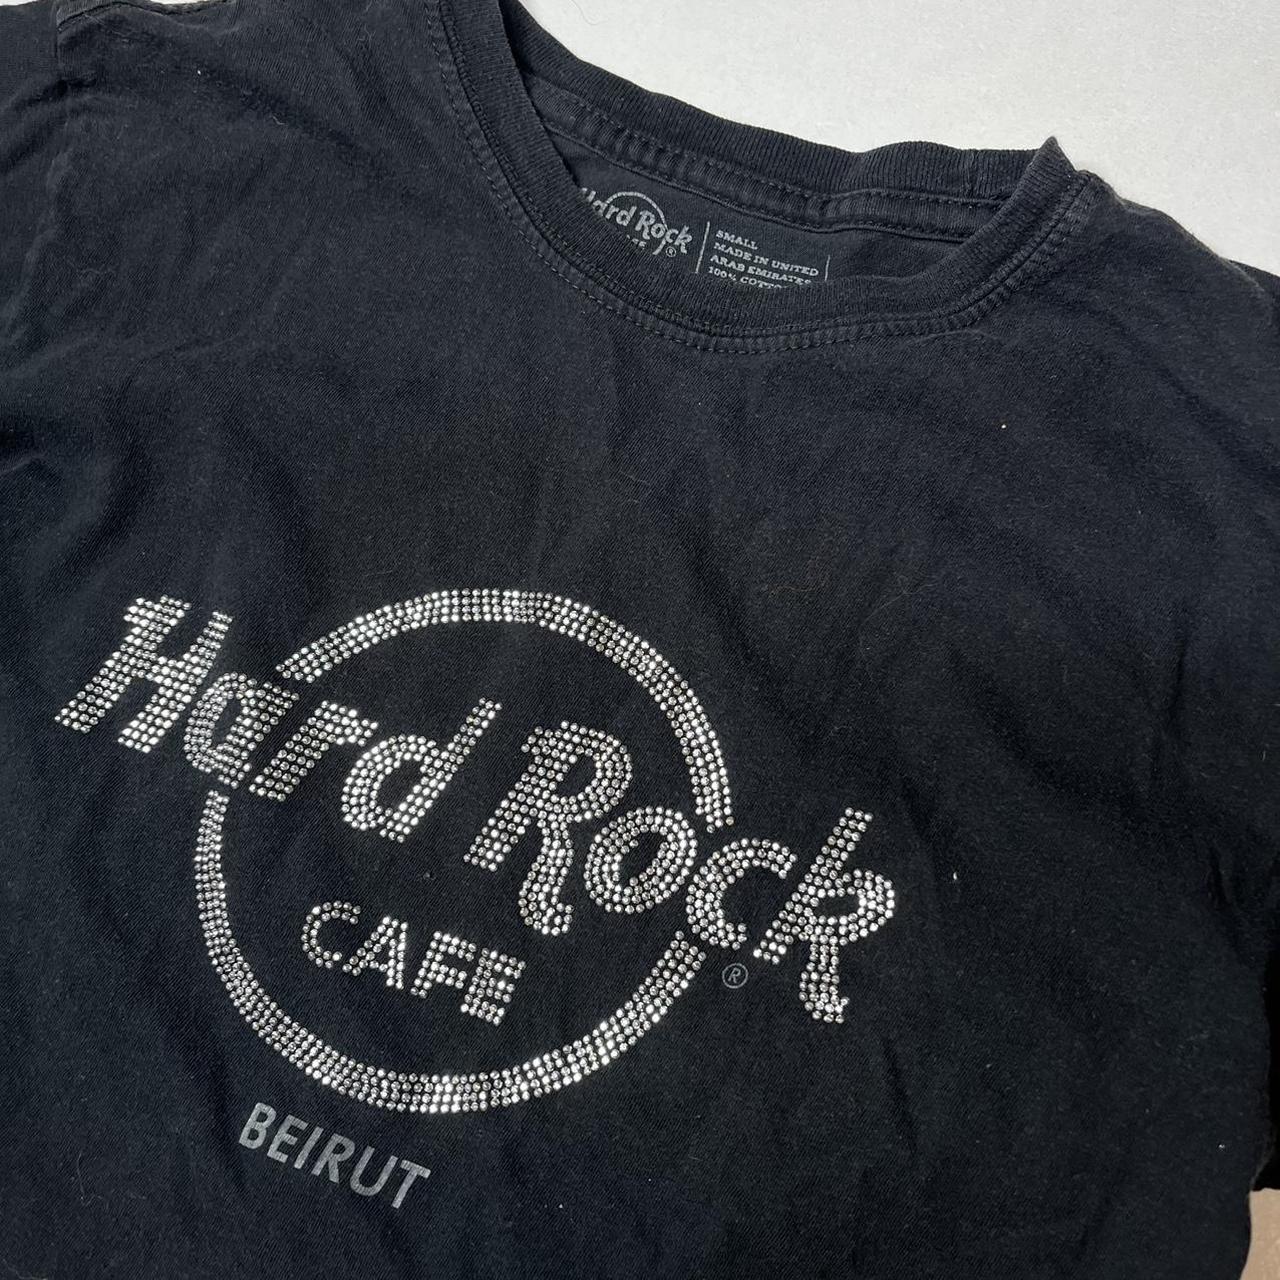 Hard Rock Cafe Women's Black T-shirt (3)